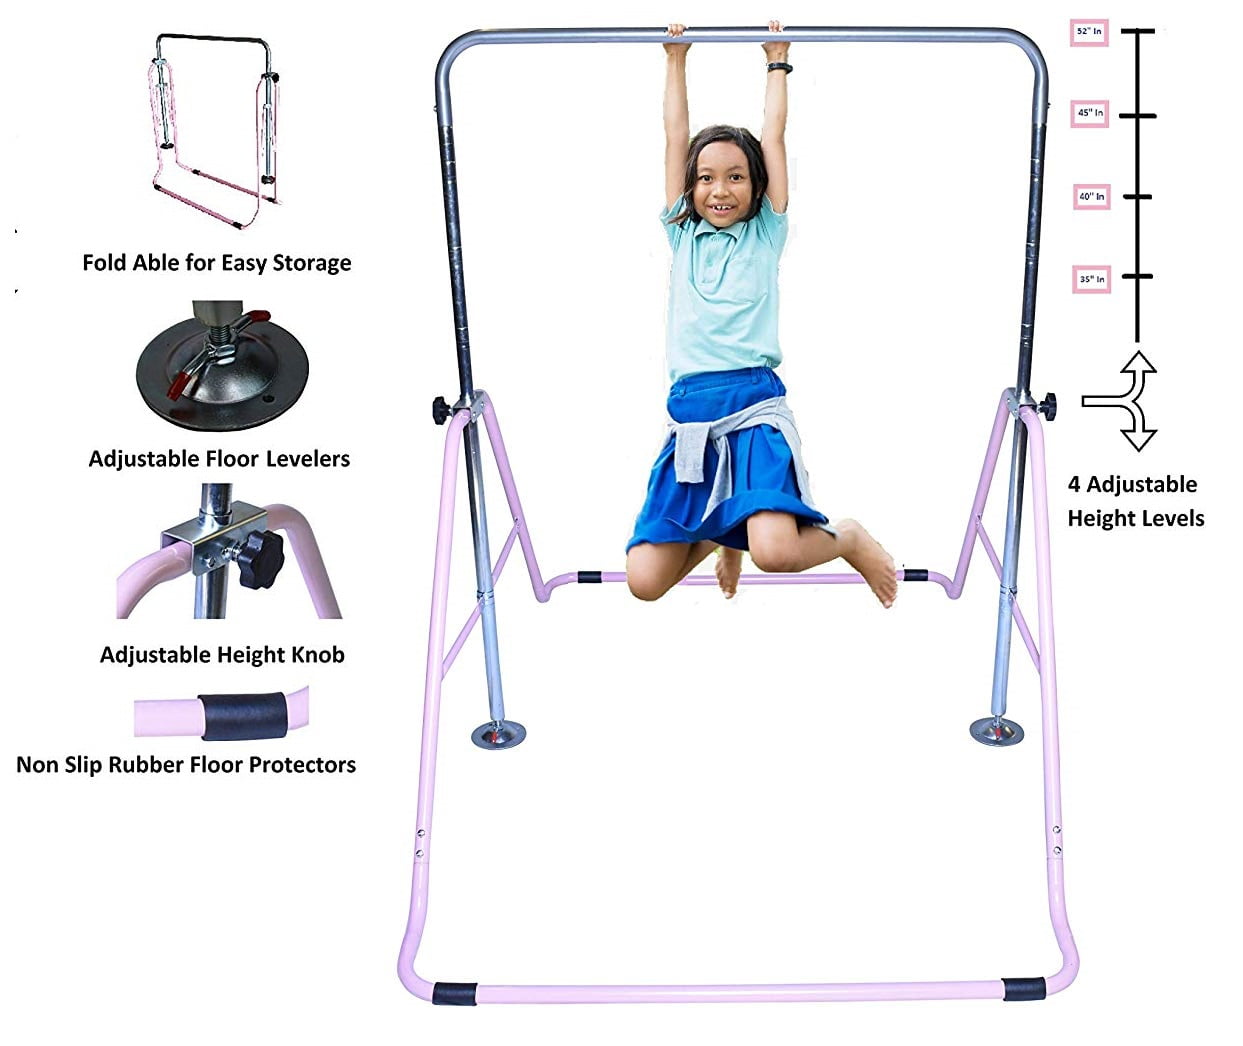 Kids Horizontal Kip Bar Jungle Gym Junior Heavy Duty Adjustable Gymnastics 